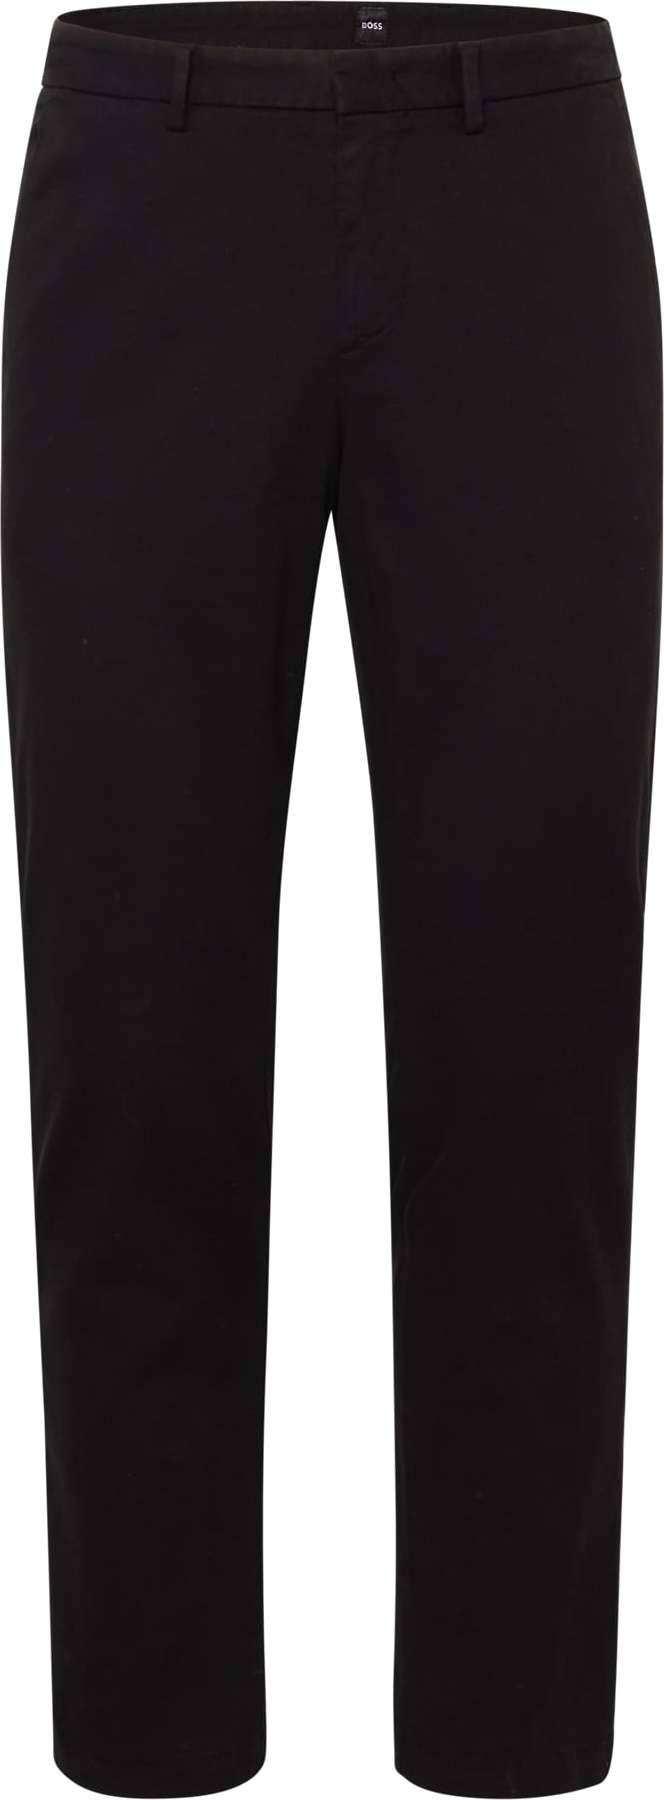 Chino kalhoty 'Kaito' BOSS Black černá